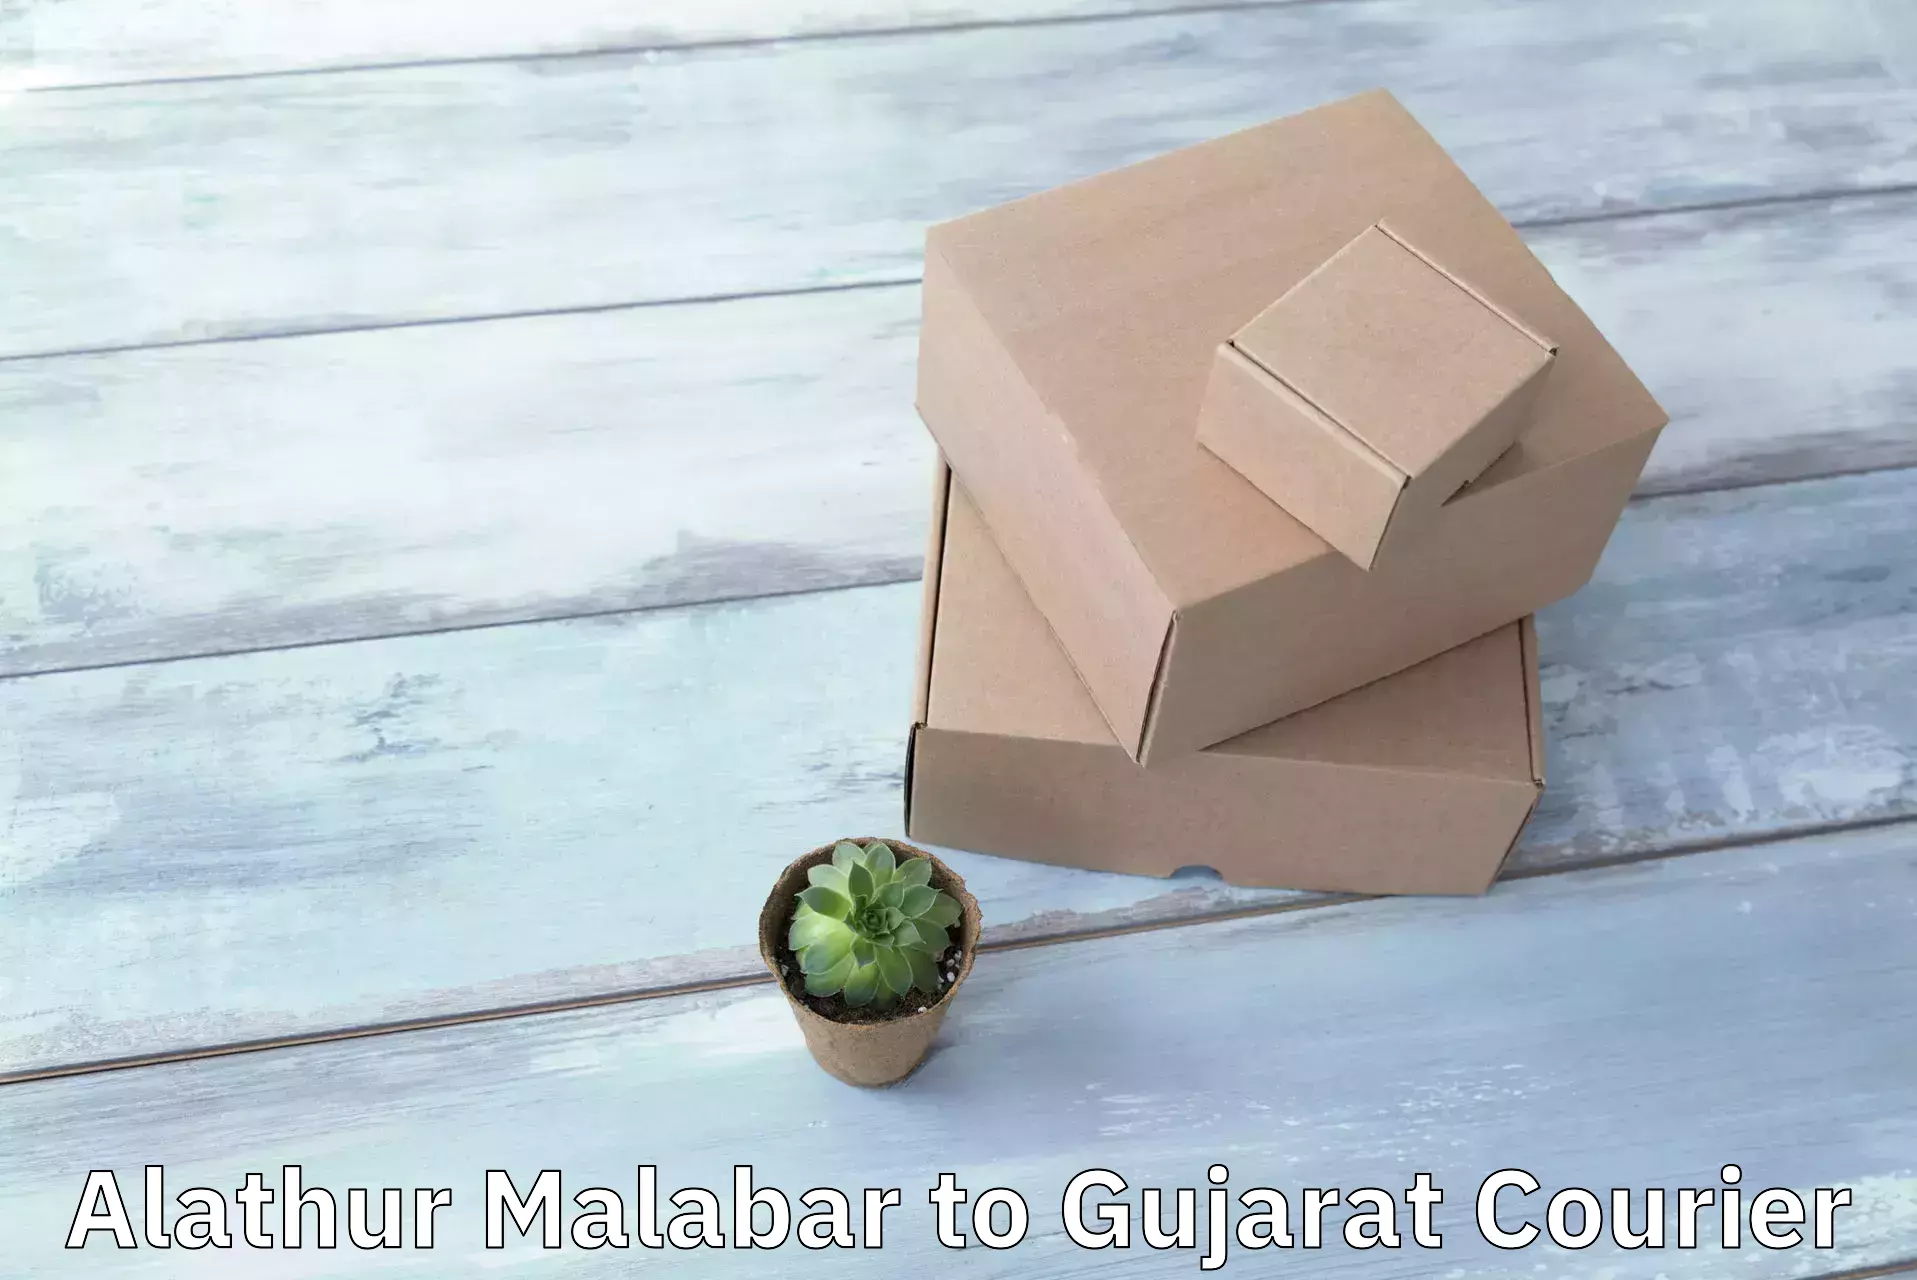 Efficient cargo handling Alathur Malabar to Gujarat